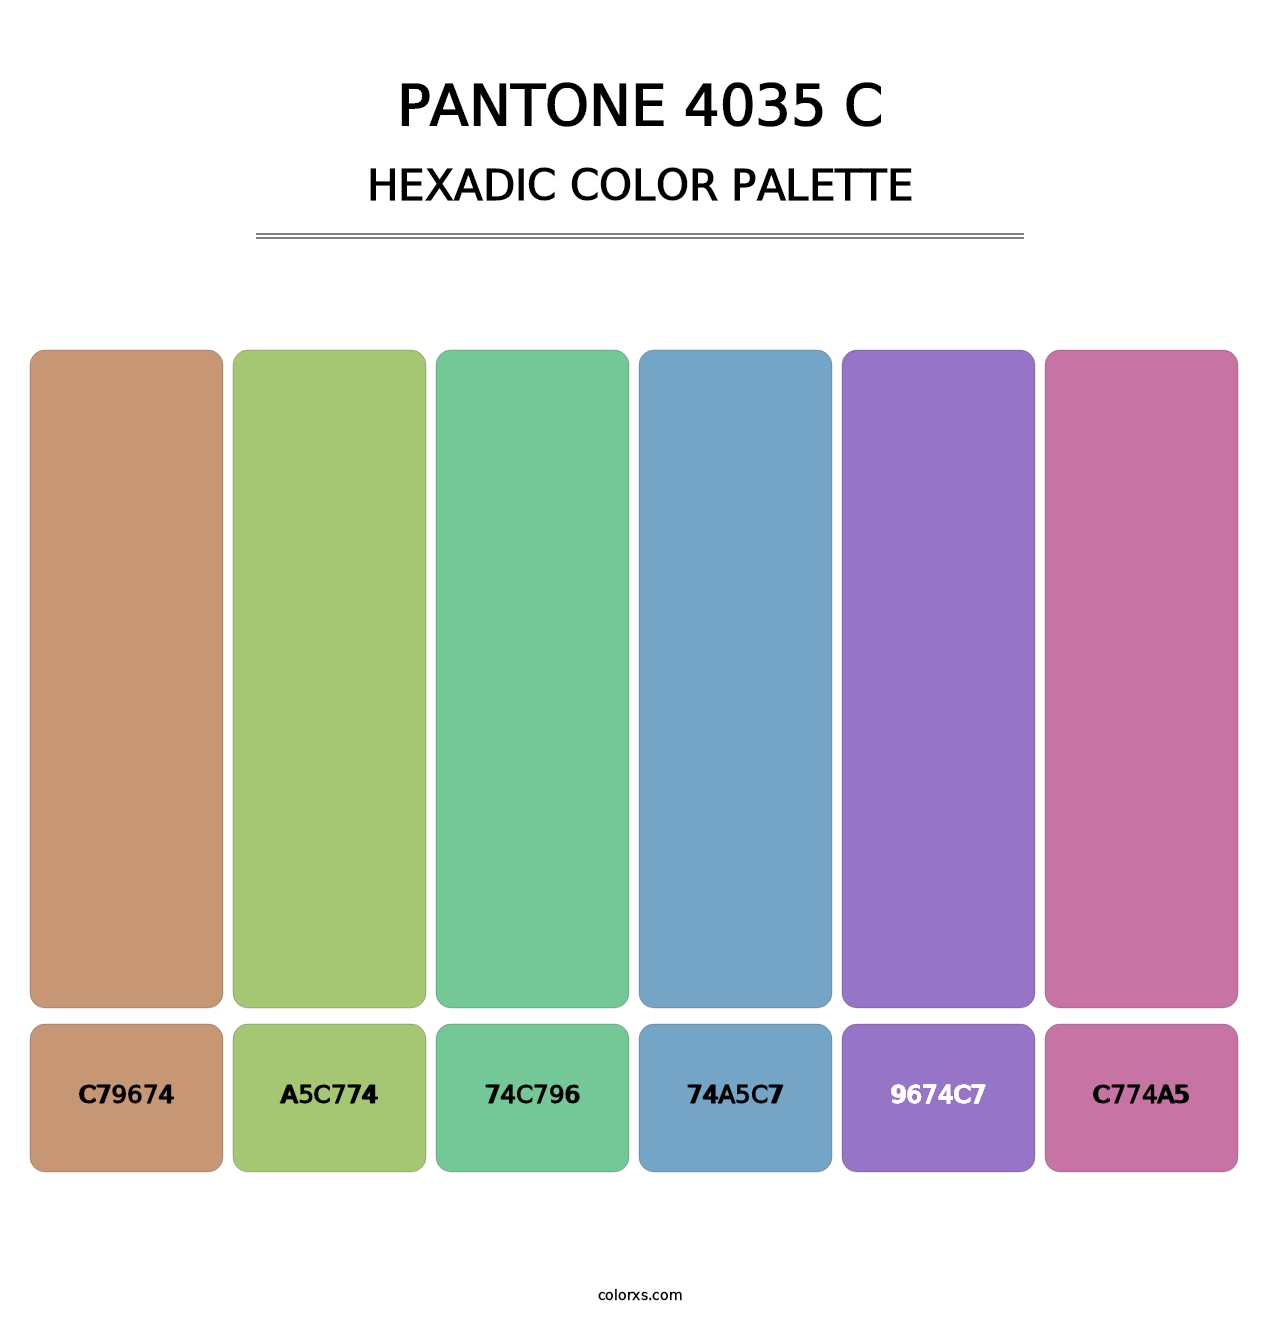 PANTONE 4035 C - Hexadic Color Palette